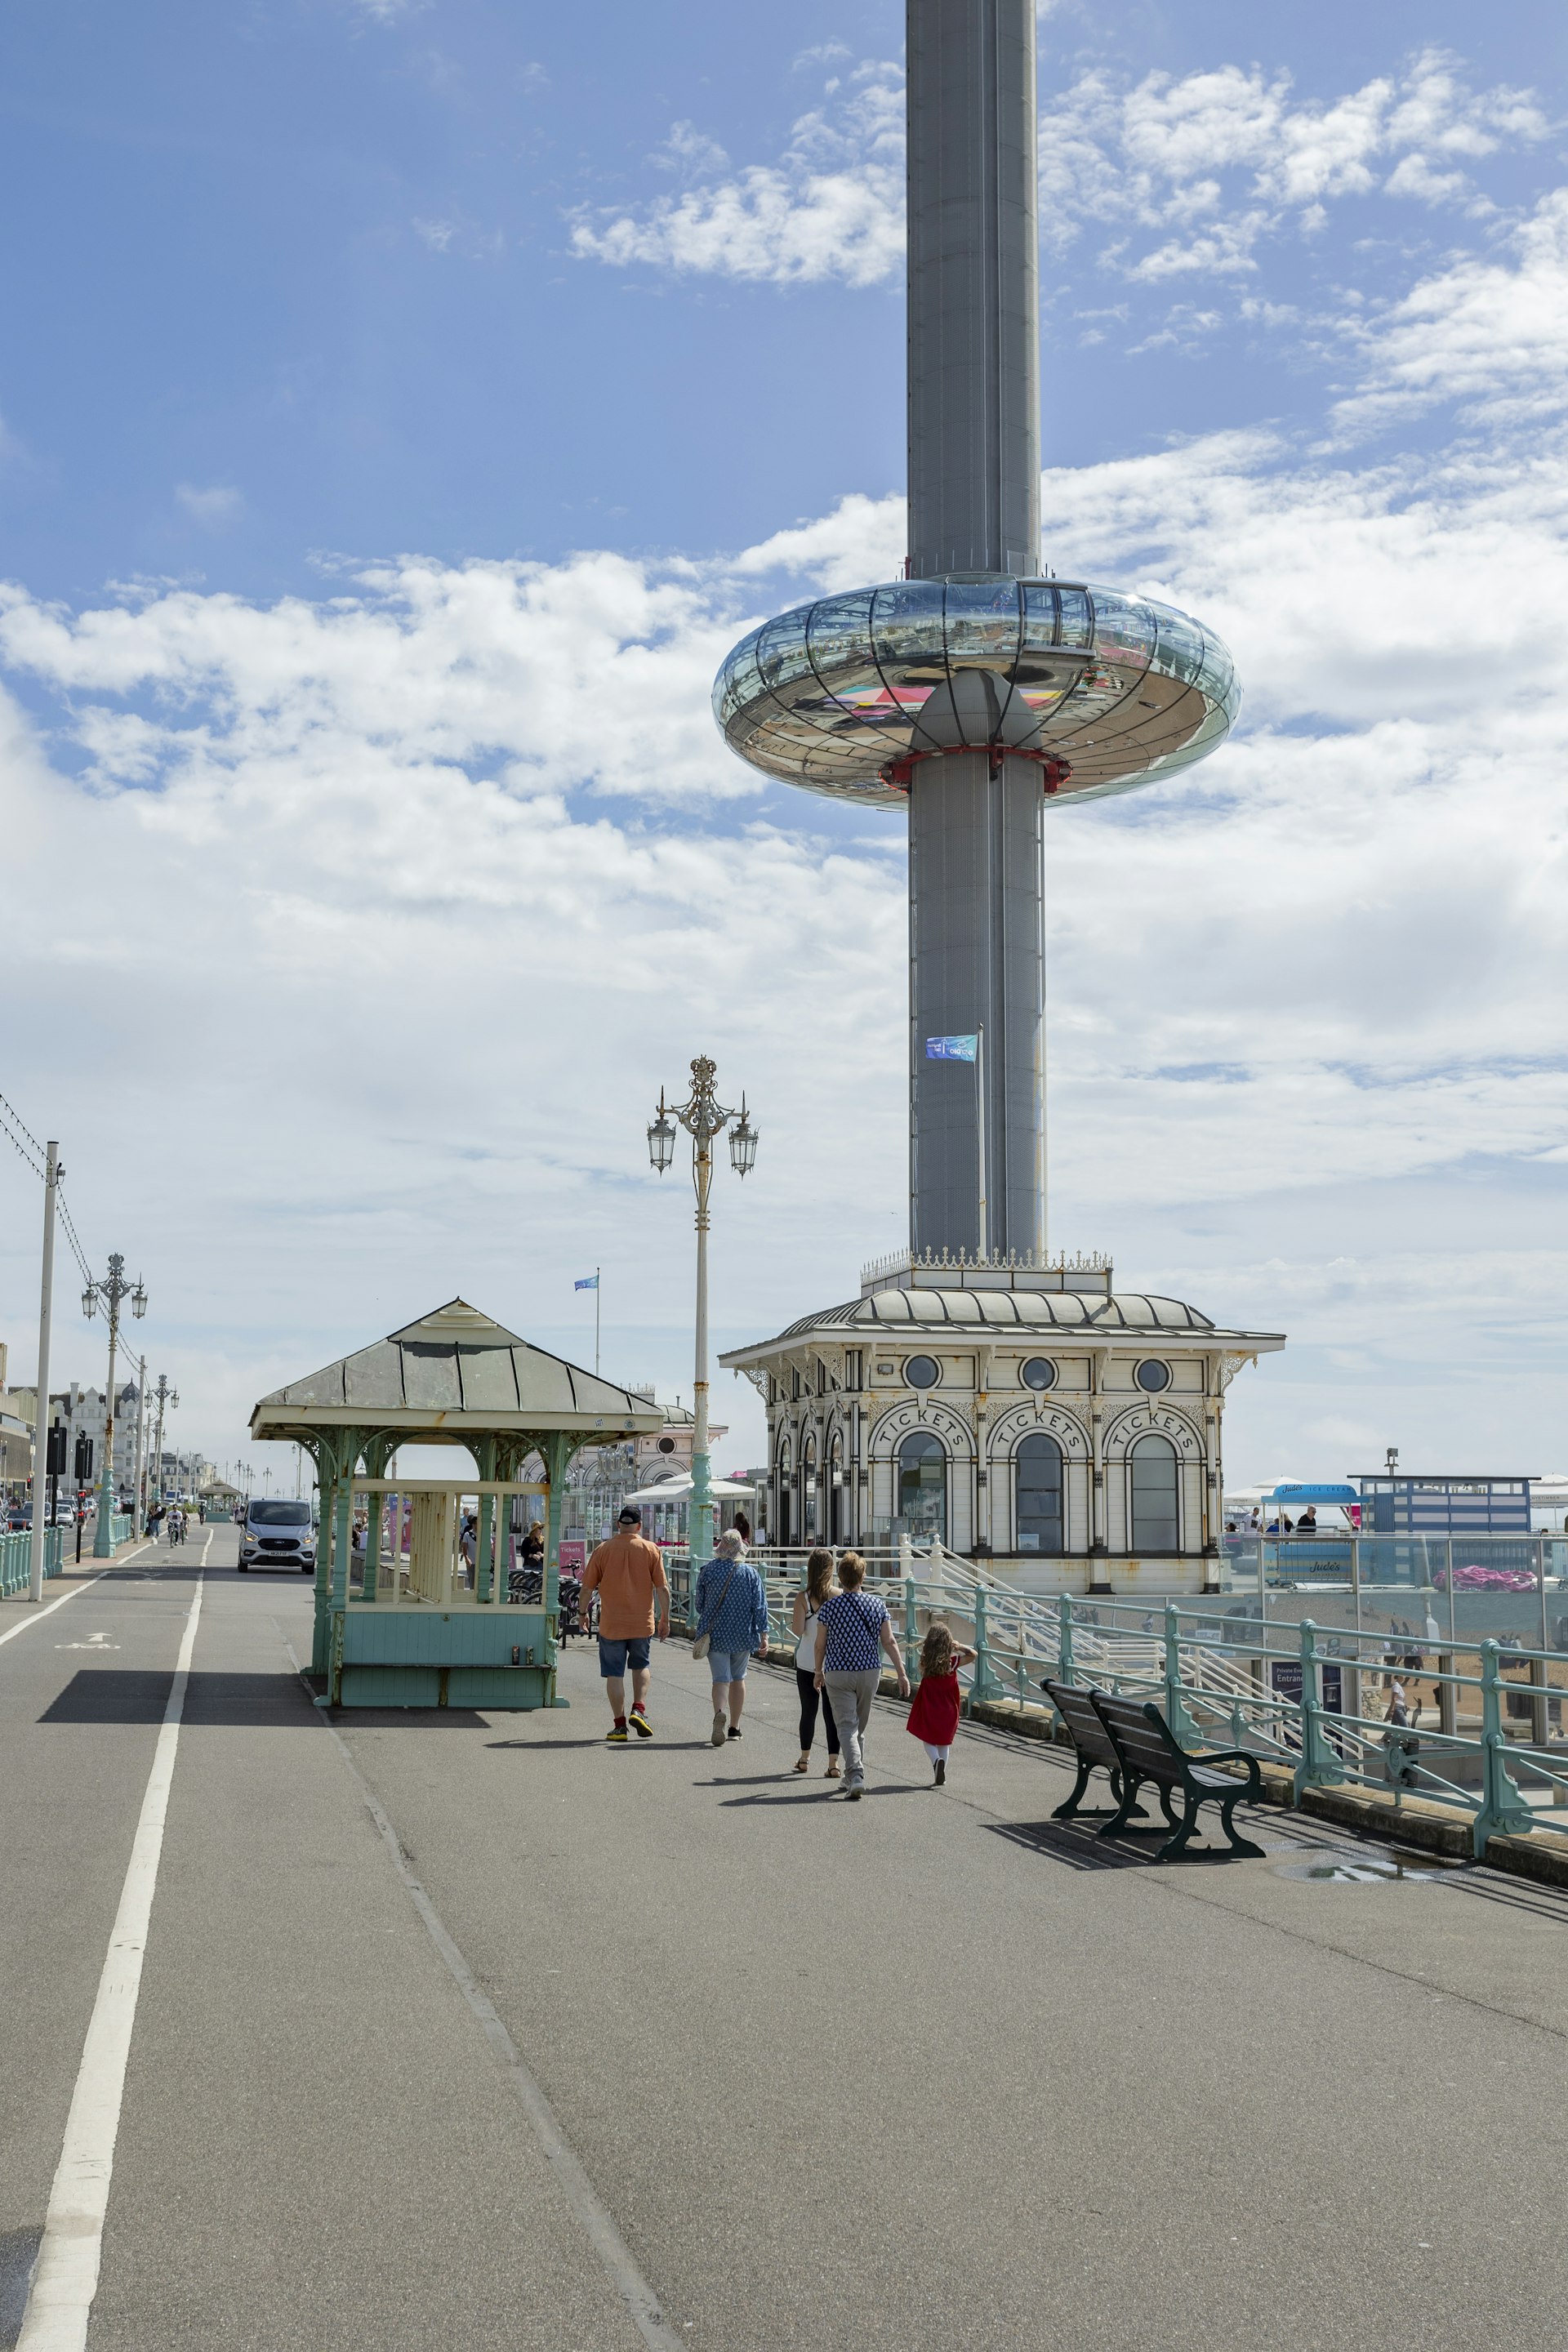 A circular glass observation pod is ascending up a high tower on a beach promenade